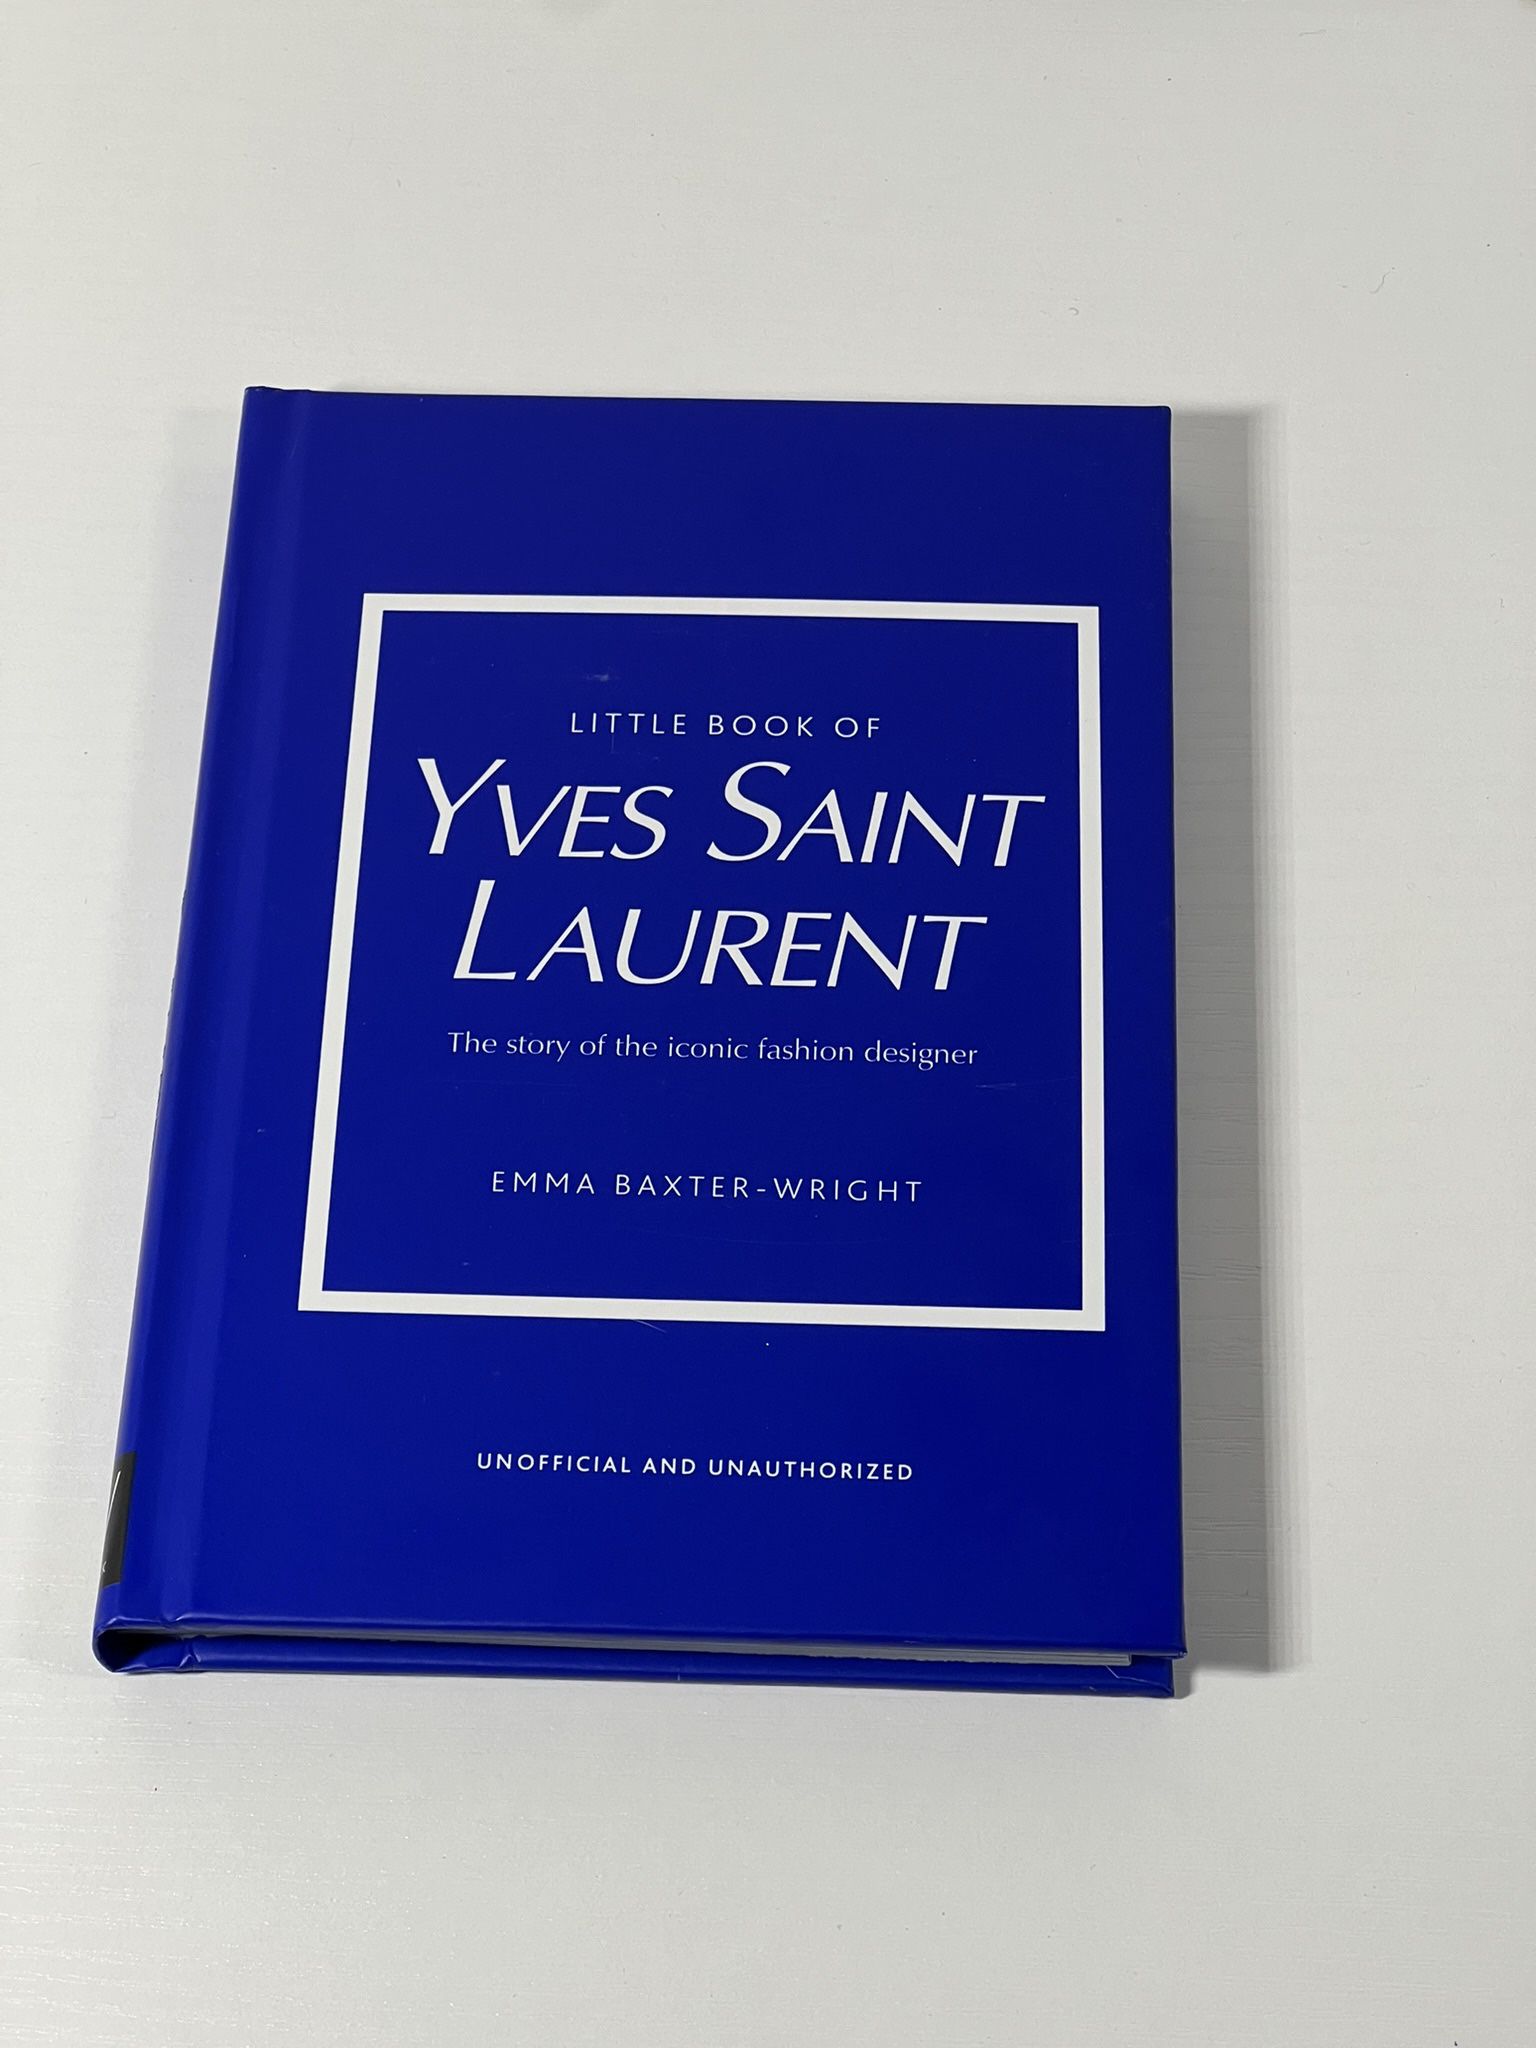 Little Books of Fashion Series: Little Book of Yves Saint Laurent